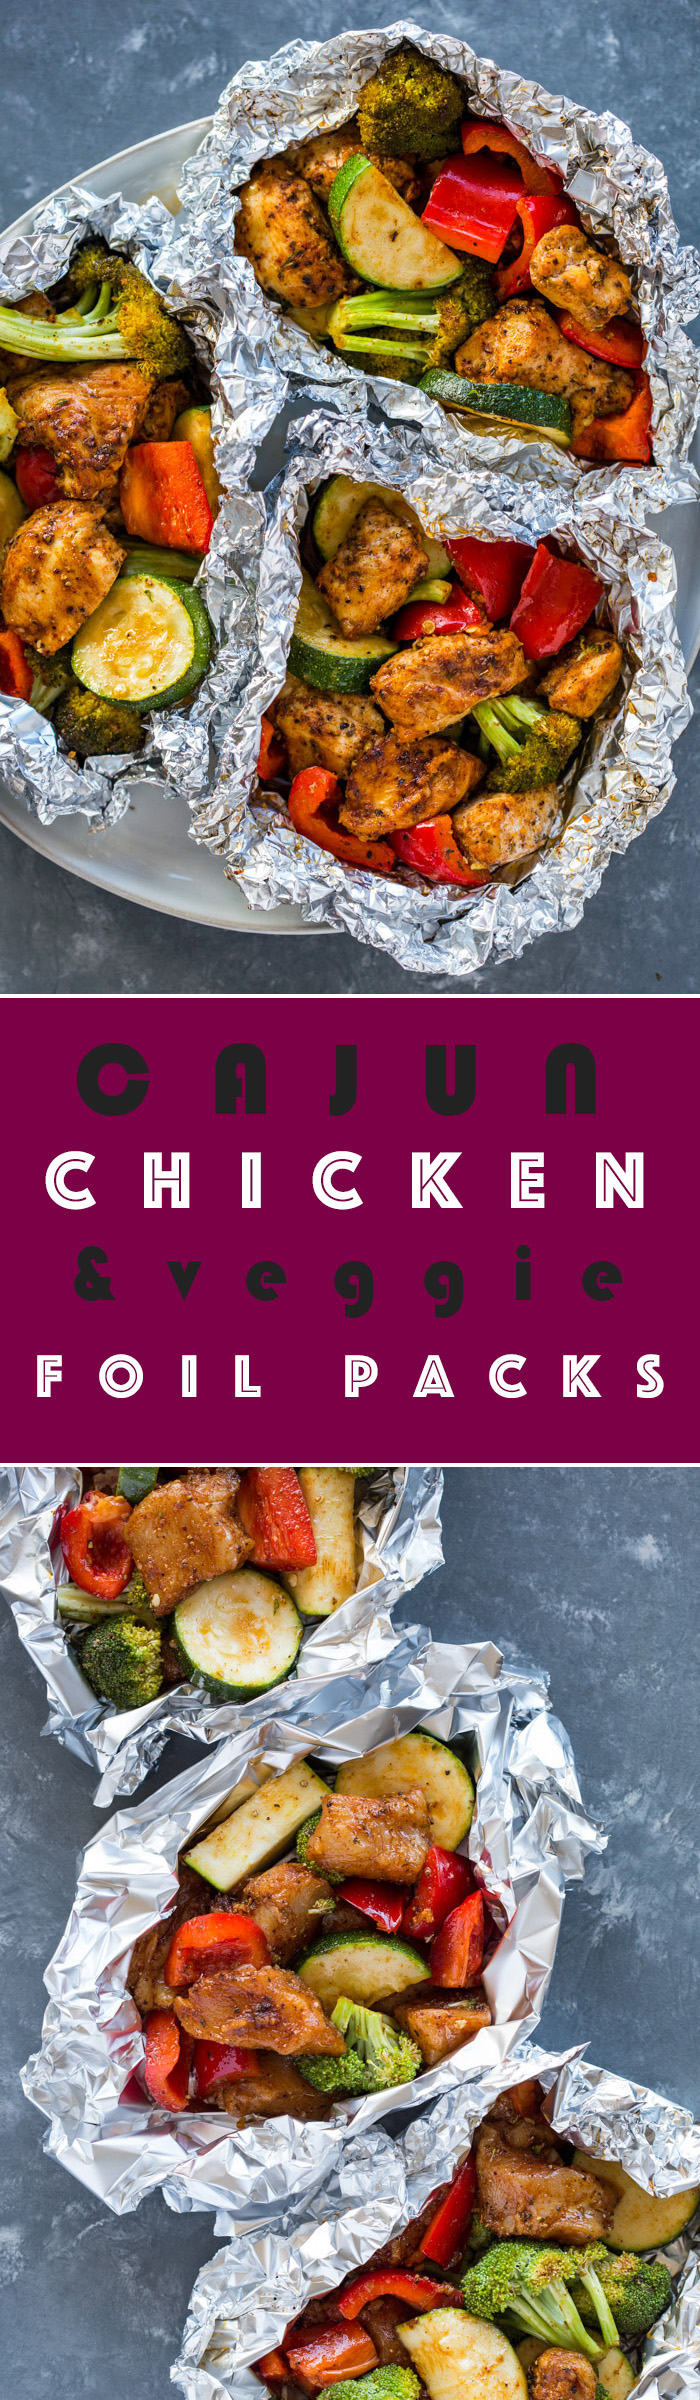 Cajun Chicken and Veggie Foil Packs